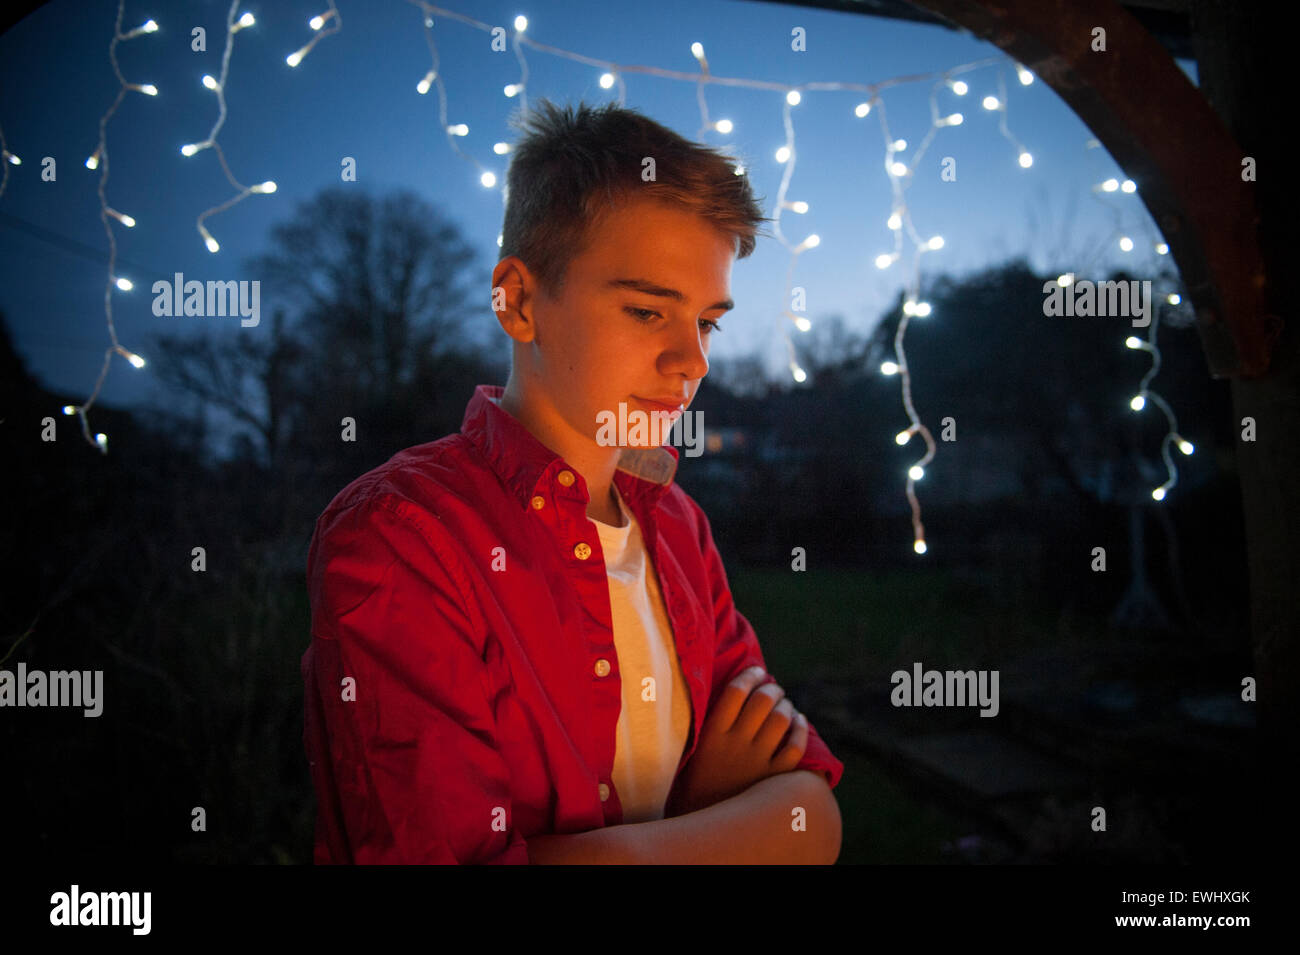 A boy considers Christmas on Christmas day at dusk Stock Photo